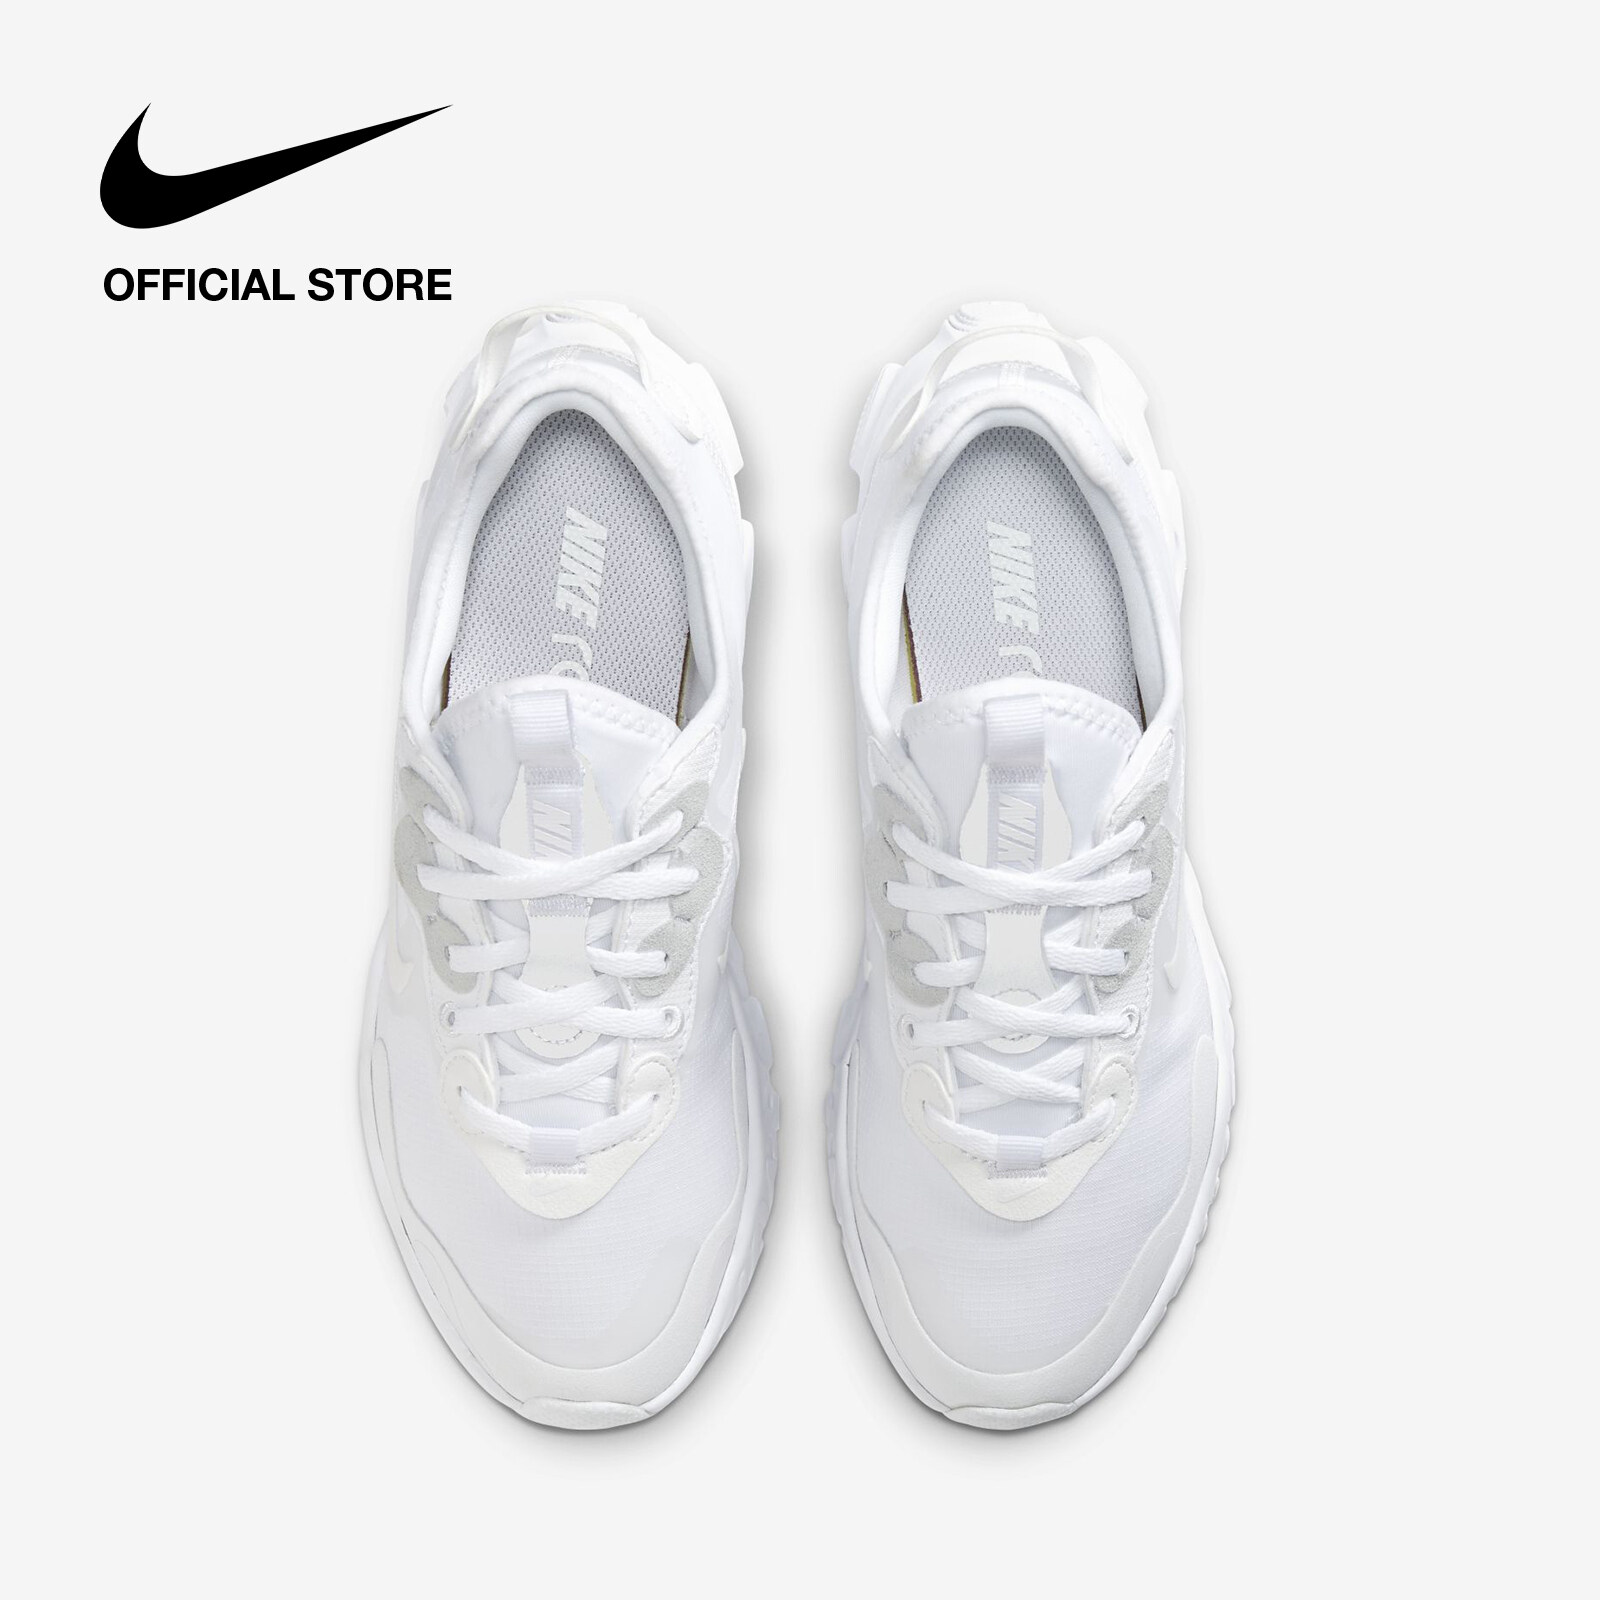 Nike Women's React Art3mis Shoes - White รองเท้าผู้หญิง Nike React Art3mis - สีขาว